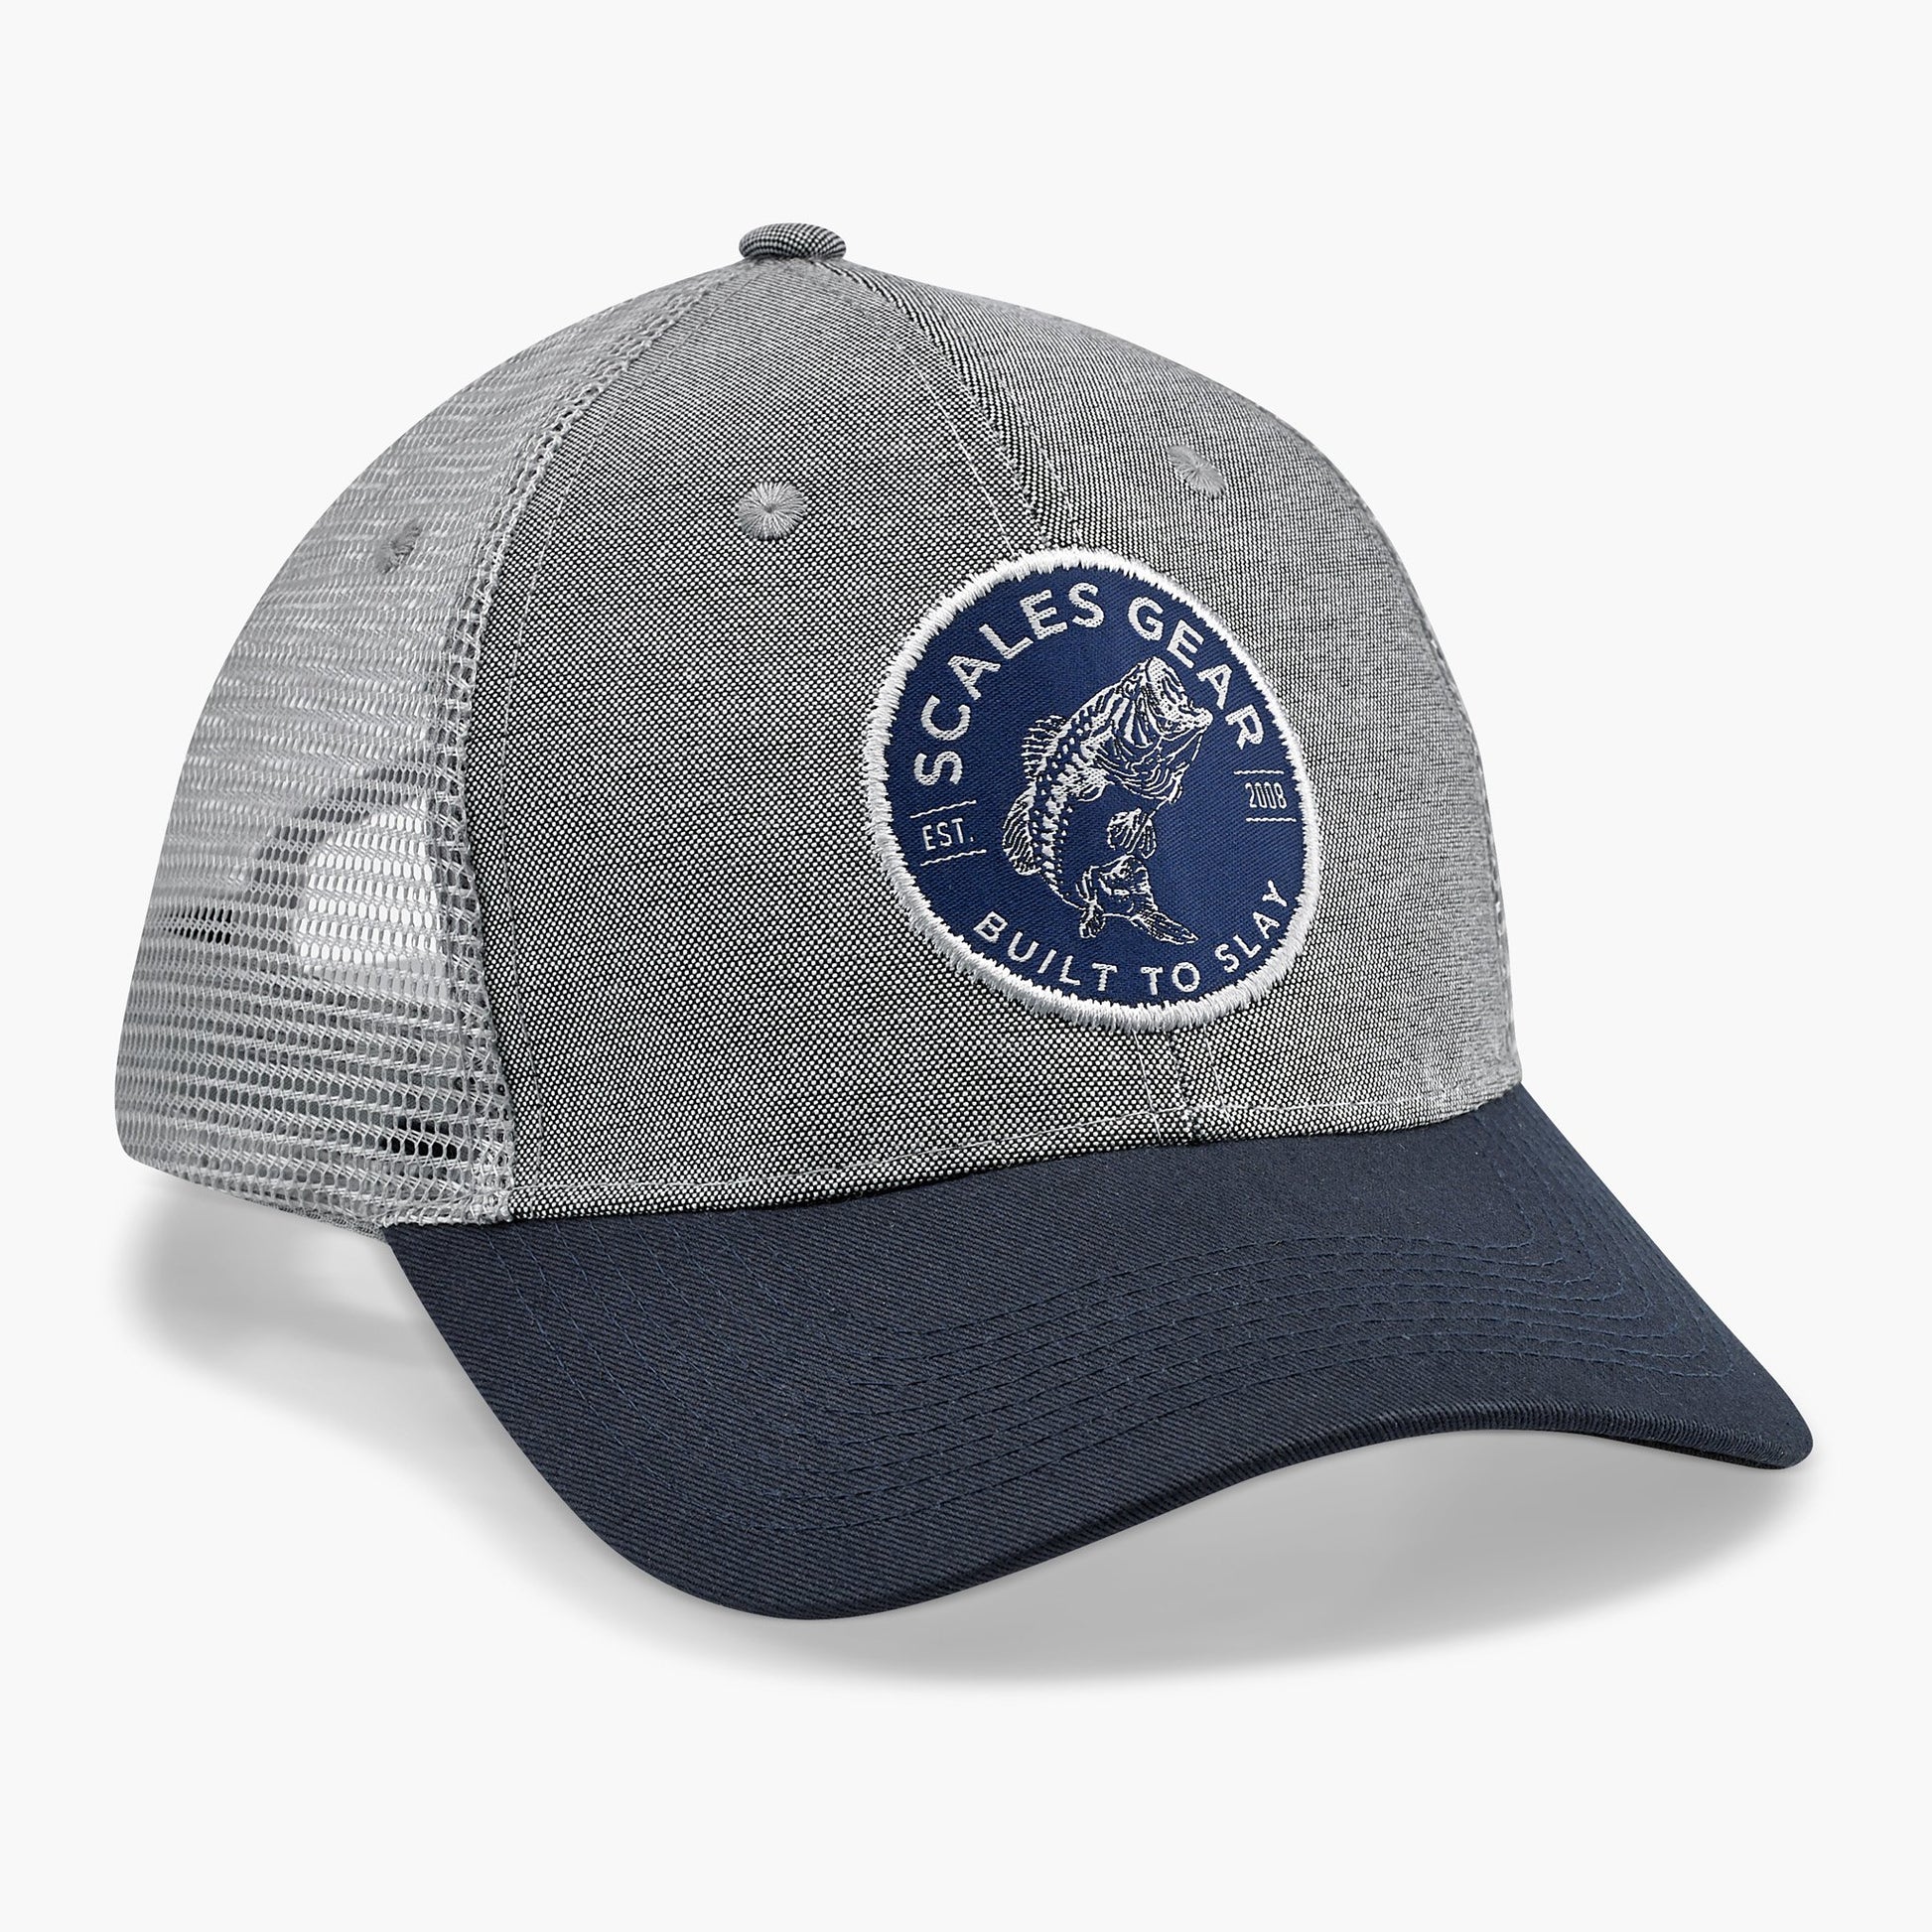 Scales Fresh Slay Trucker Hat - Grey/Navy, Size: One size, Gray